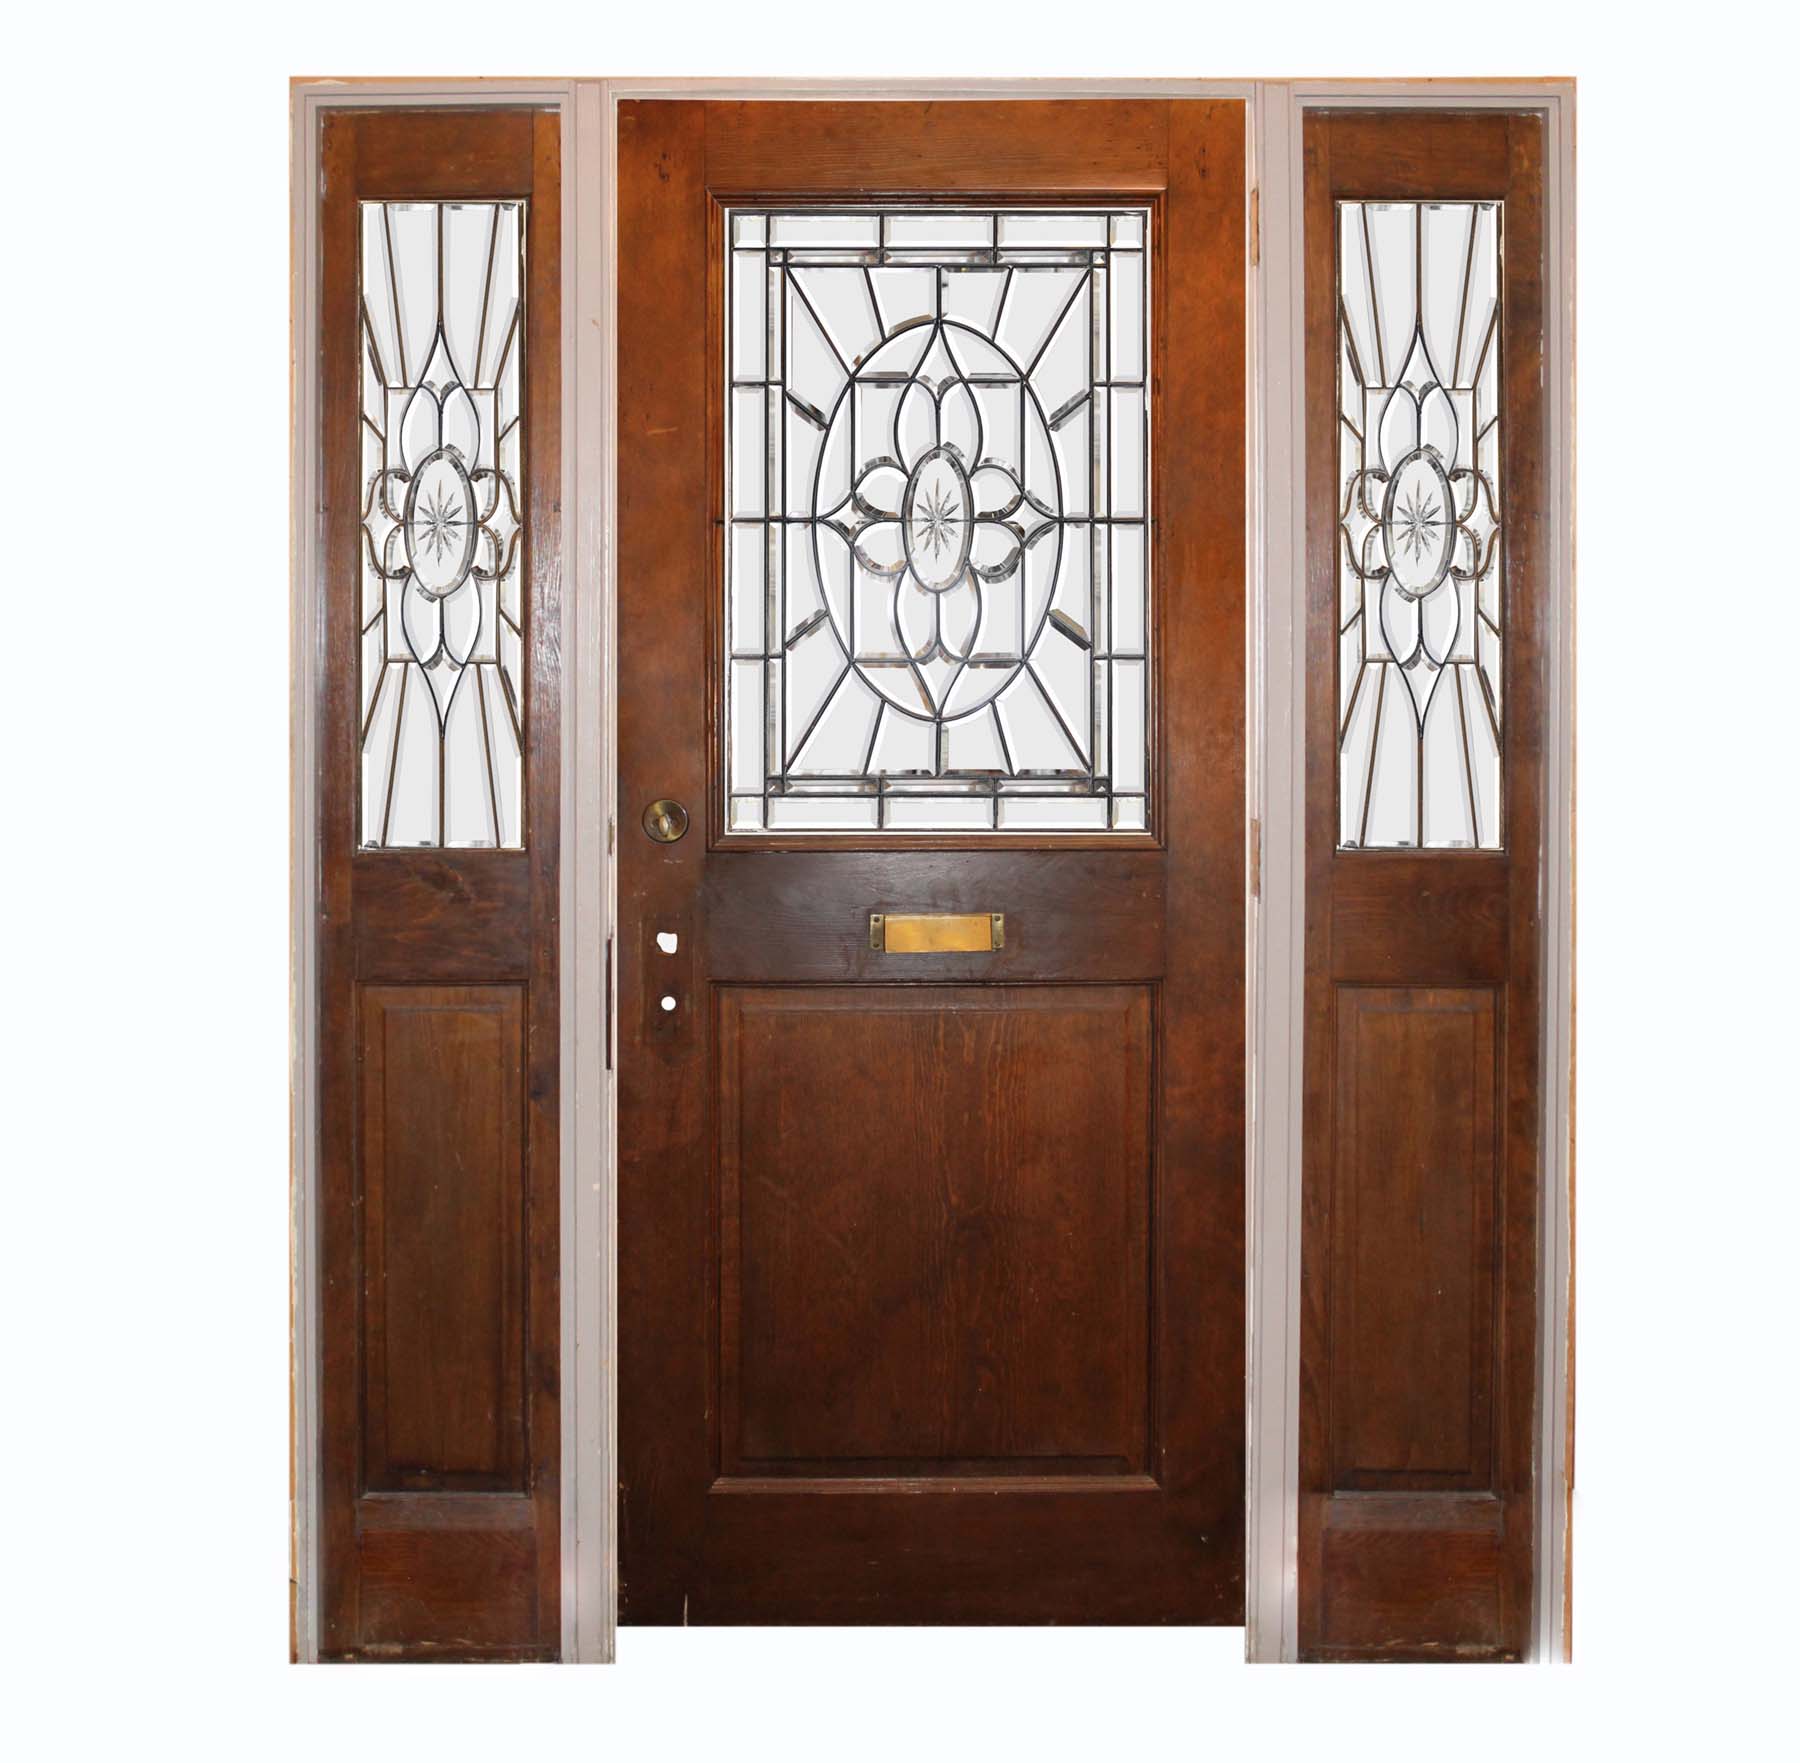 SOLD Vintage Entry Set with Leaded & Beveled Glass, “The Windsor Room”-68253